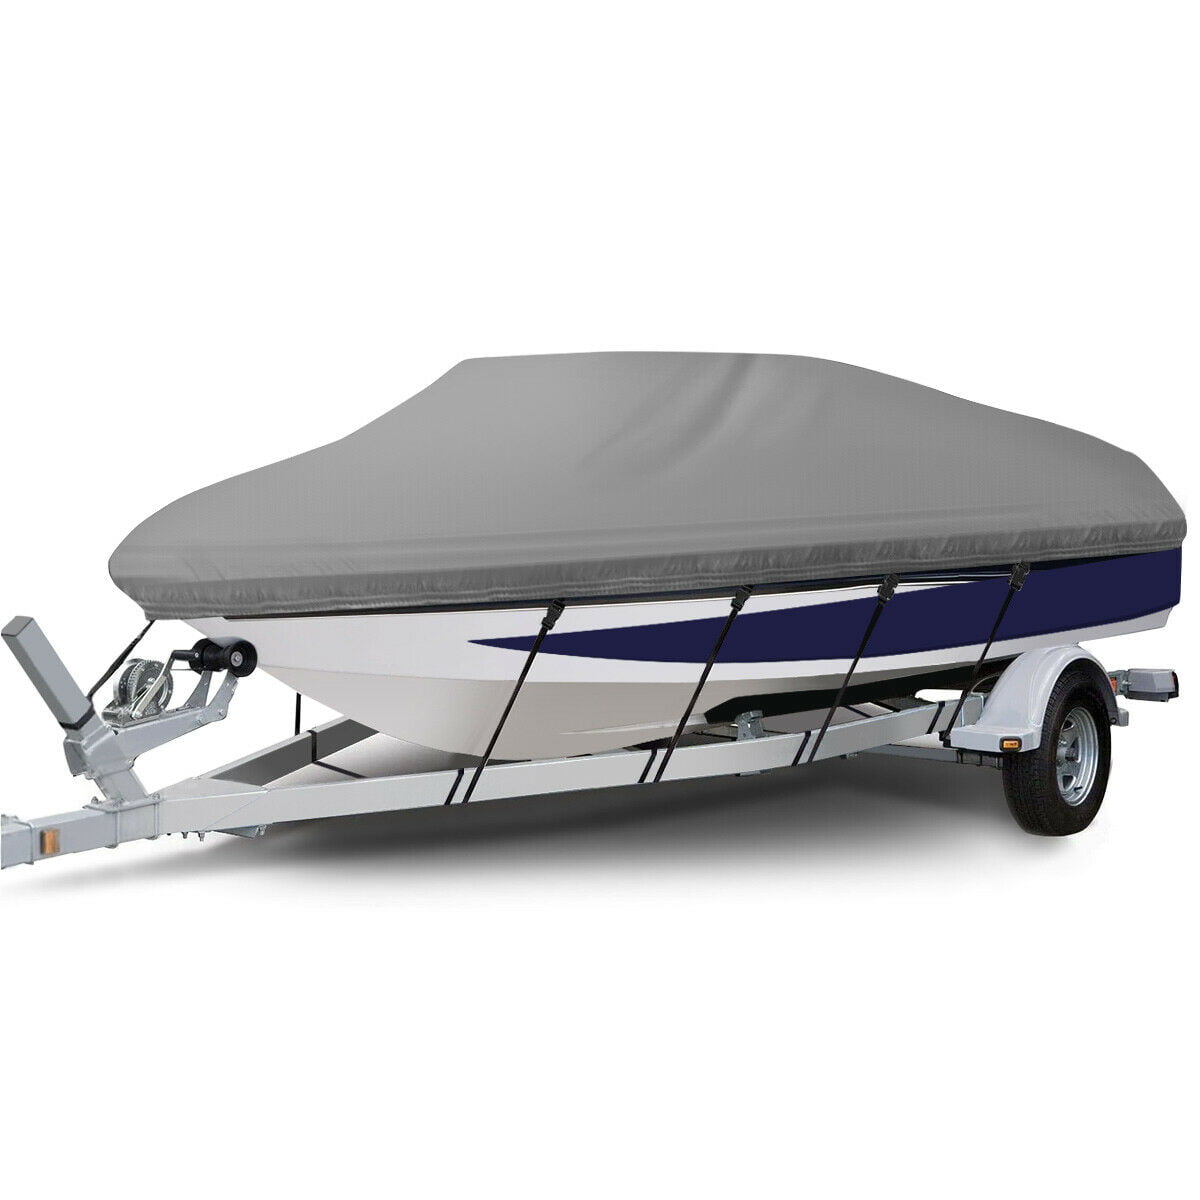 MASO Trailerable Boat Cover,Heavy Duty 20-22ft 210D UV Protected Waterproof yacht Speedboat Fish-Ski V-Hull Cover Bag